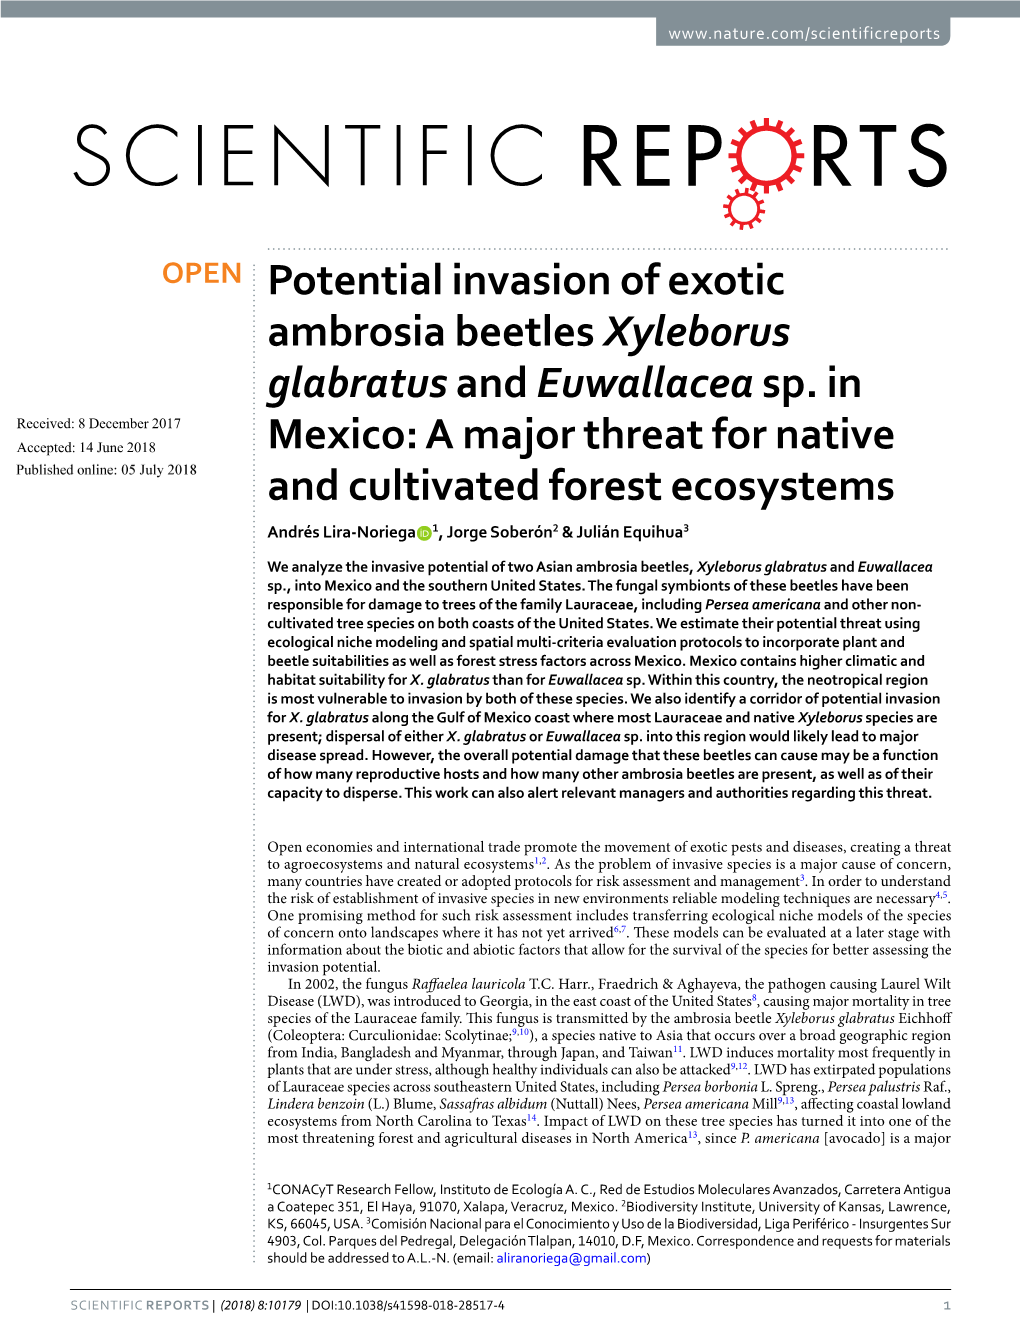 Potential Invasion of Exotic Ambrosia Beetles Xyleborus Glabratus and Euwallacea Sp. in Mexico